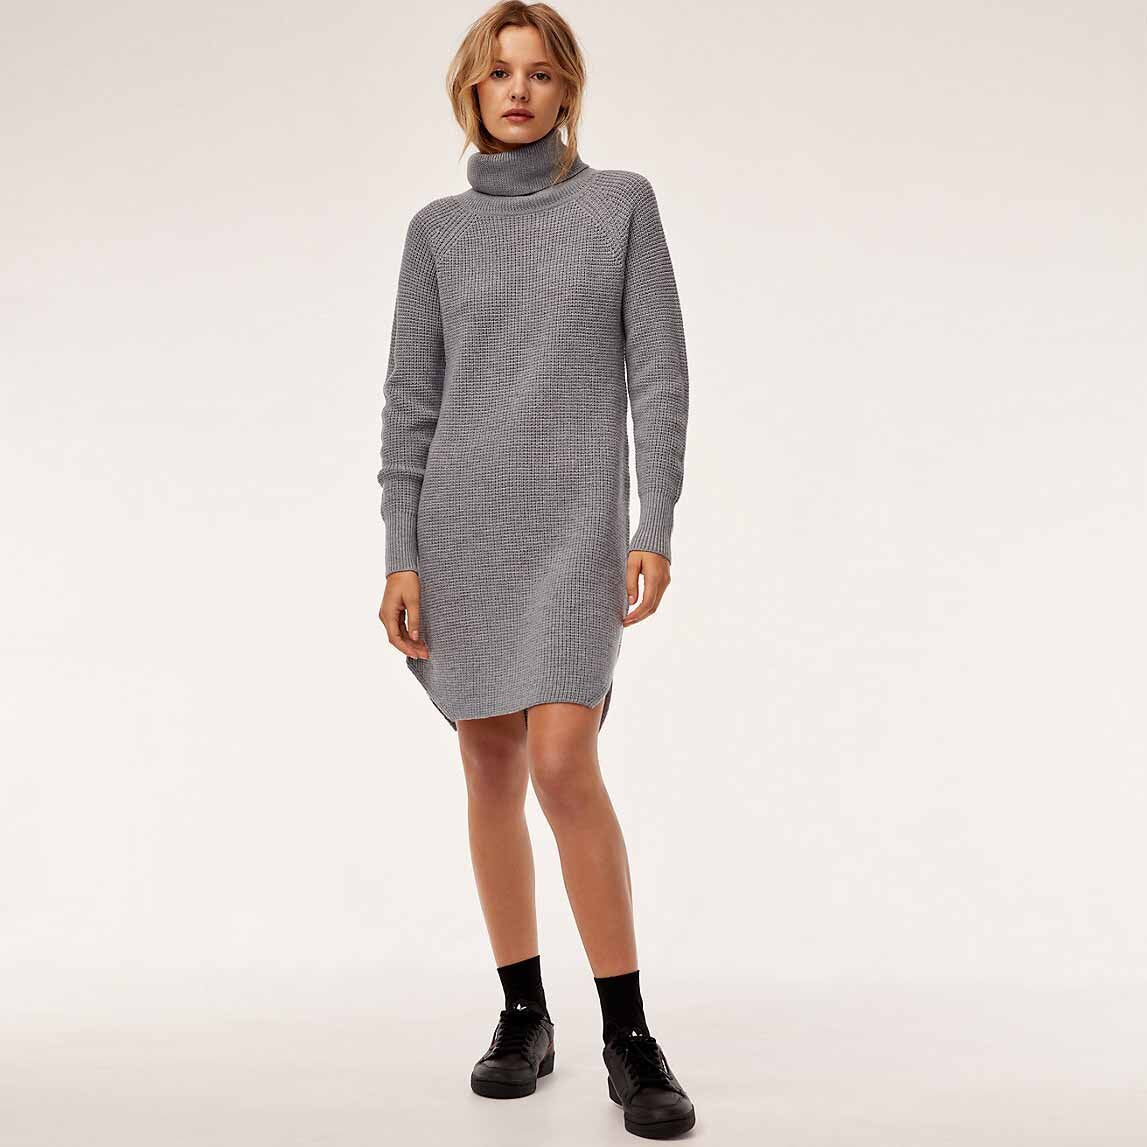 Wilfred Free Bianca wool sweater dress - size Small